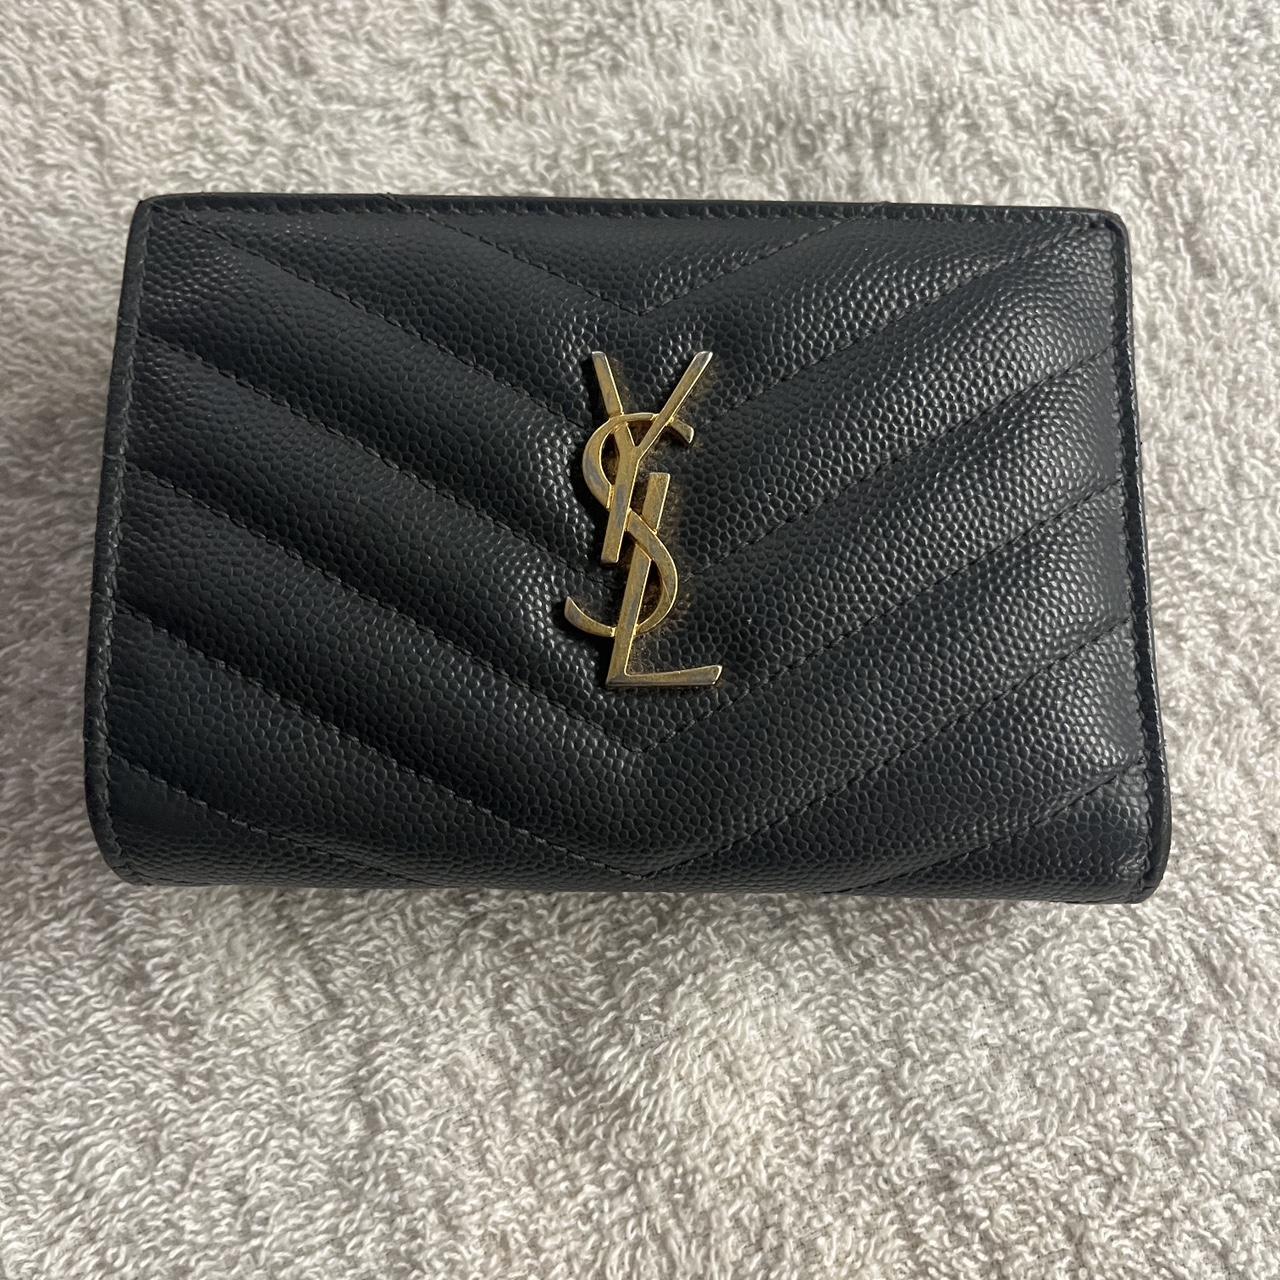 Ysl woman’s wallet, small size, gold logo on dark... - Depop